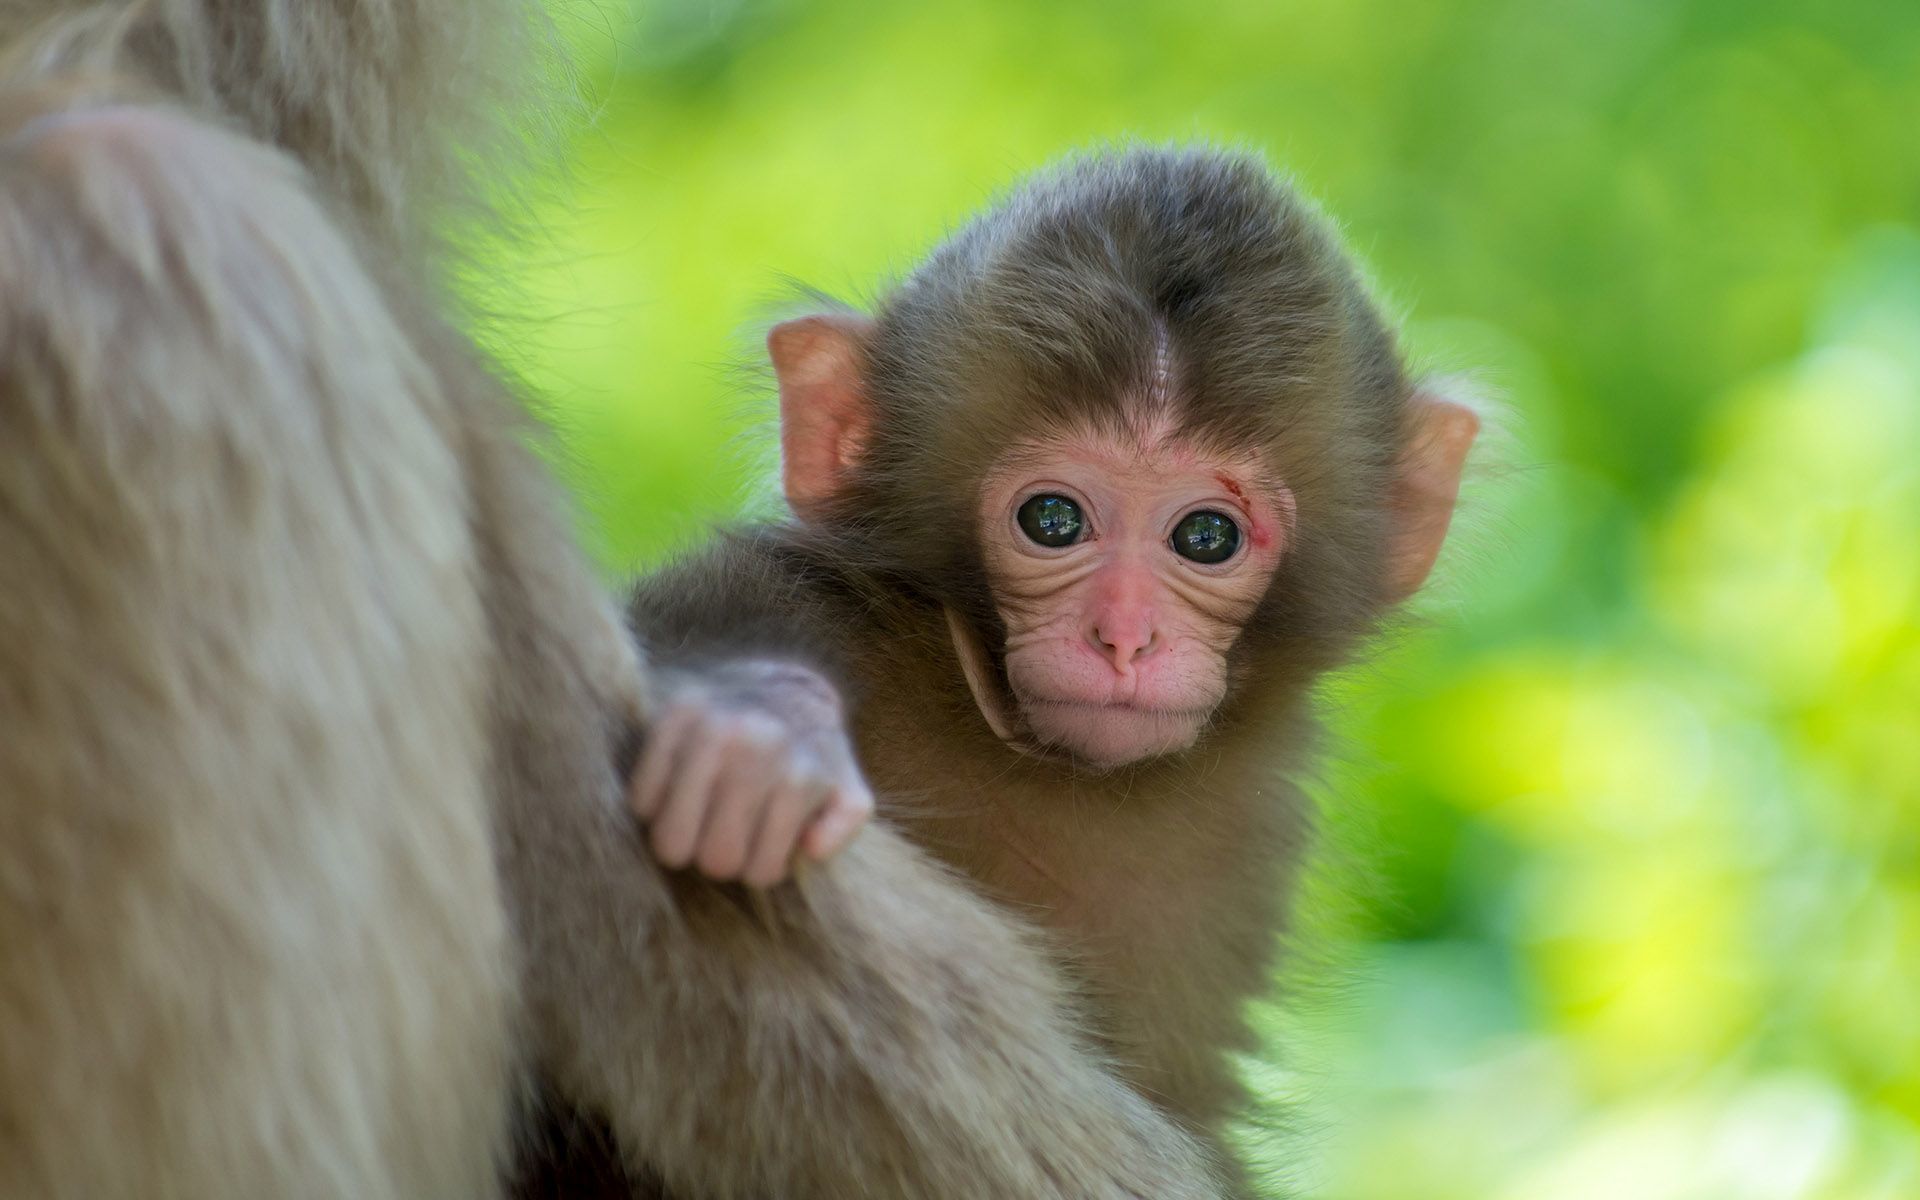 New Lock Screen Wallpapers animal, monkey, baby animal, cute, primate, monkeys